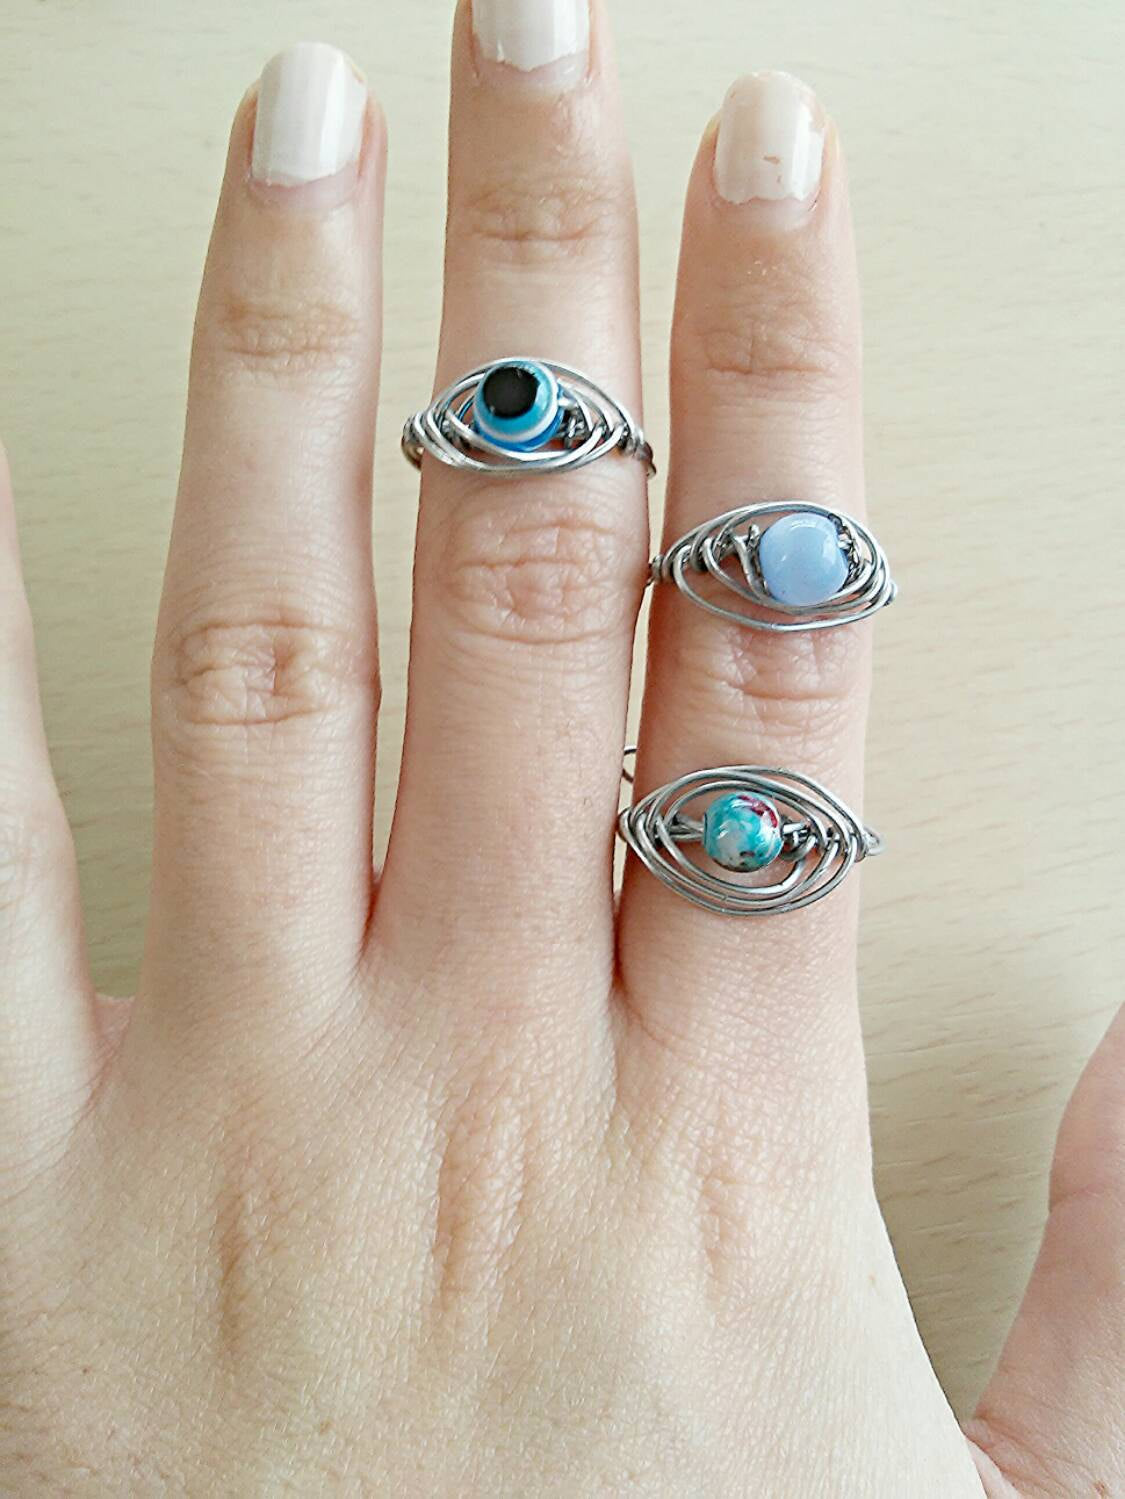 Evil eye protection ring/boho ring/boho eye rings/blue wire ring/wire ring/boho wire ring/hippie ring/hippie eye wire ring/adjustable